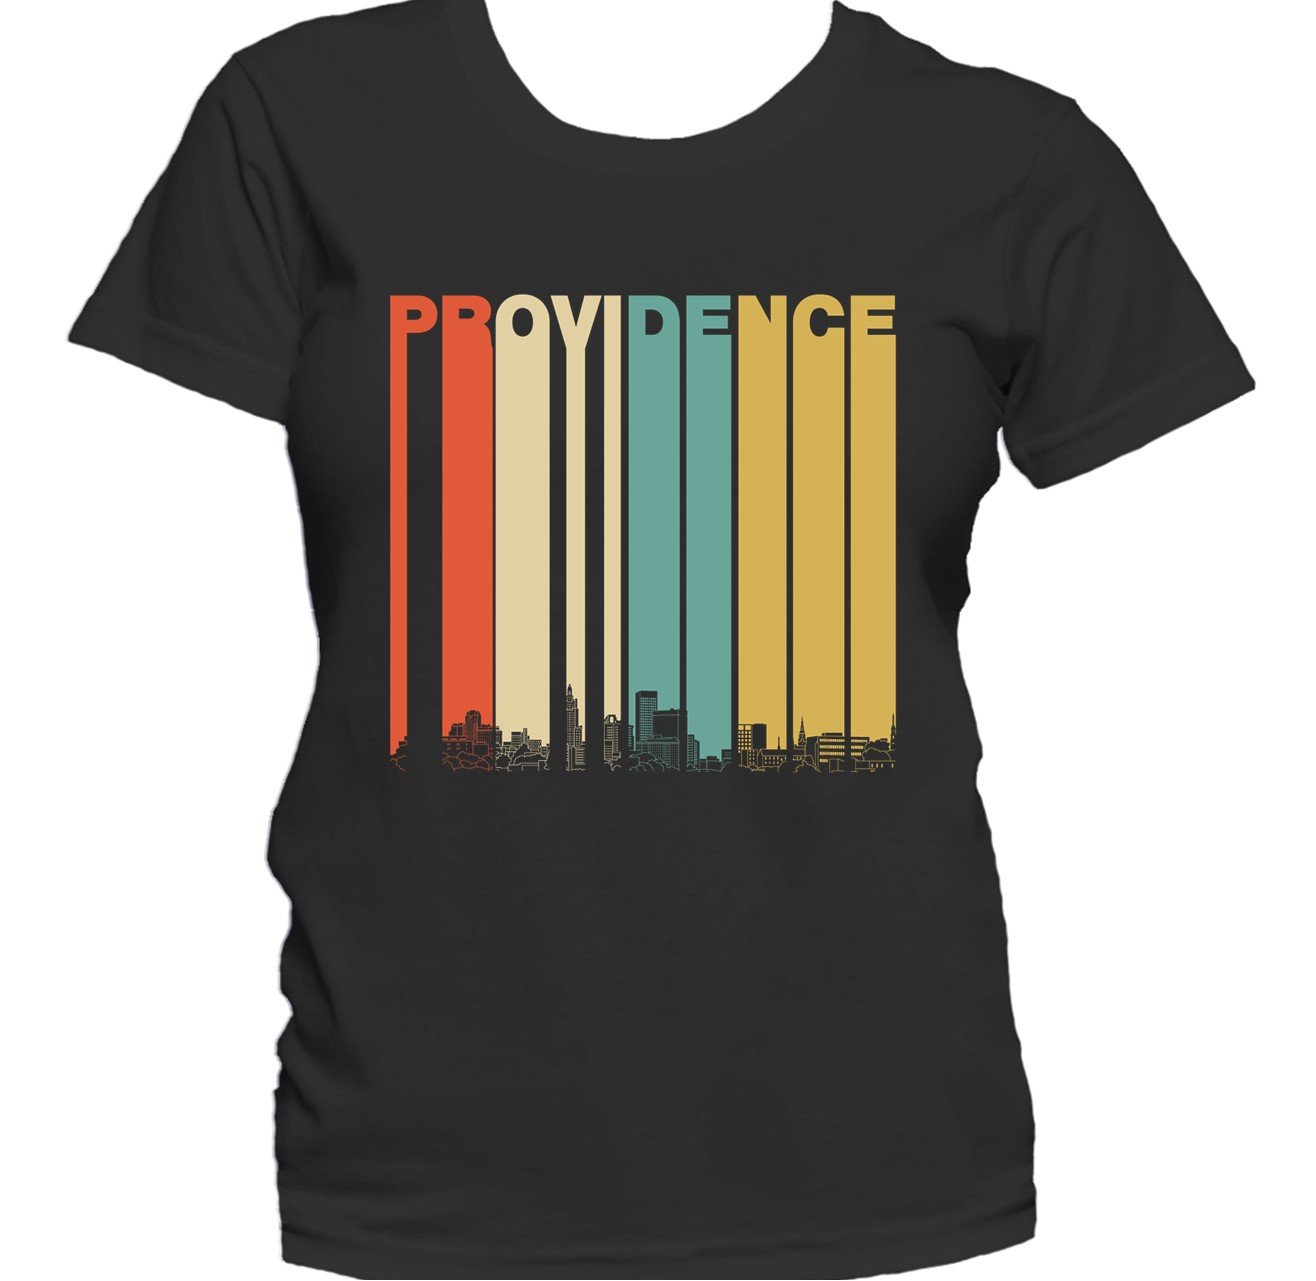 Retro 1970's Style Providence Rhode Island Skyline Women's T-Shirt